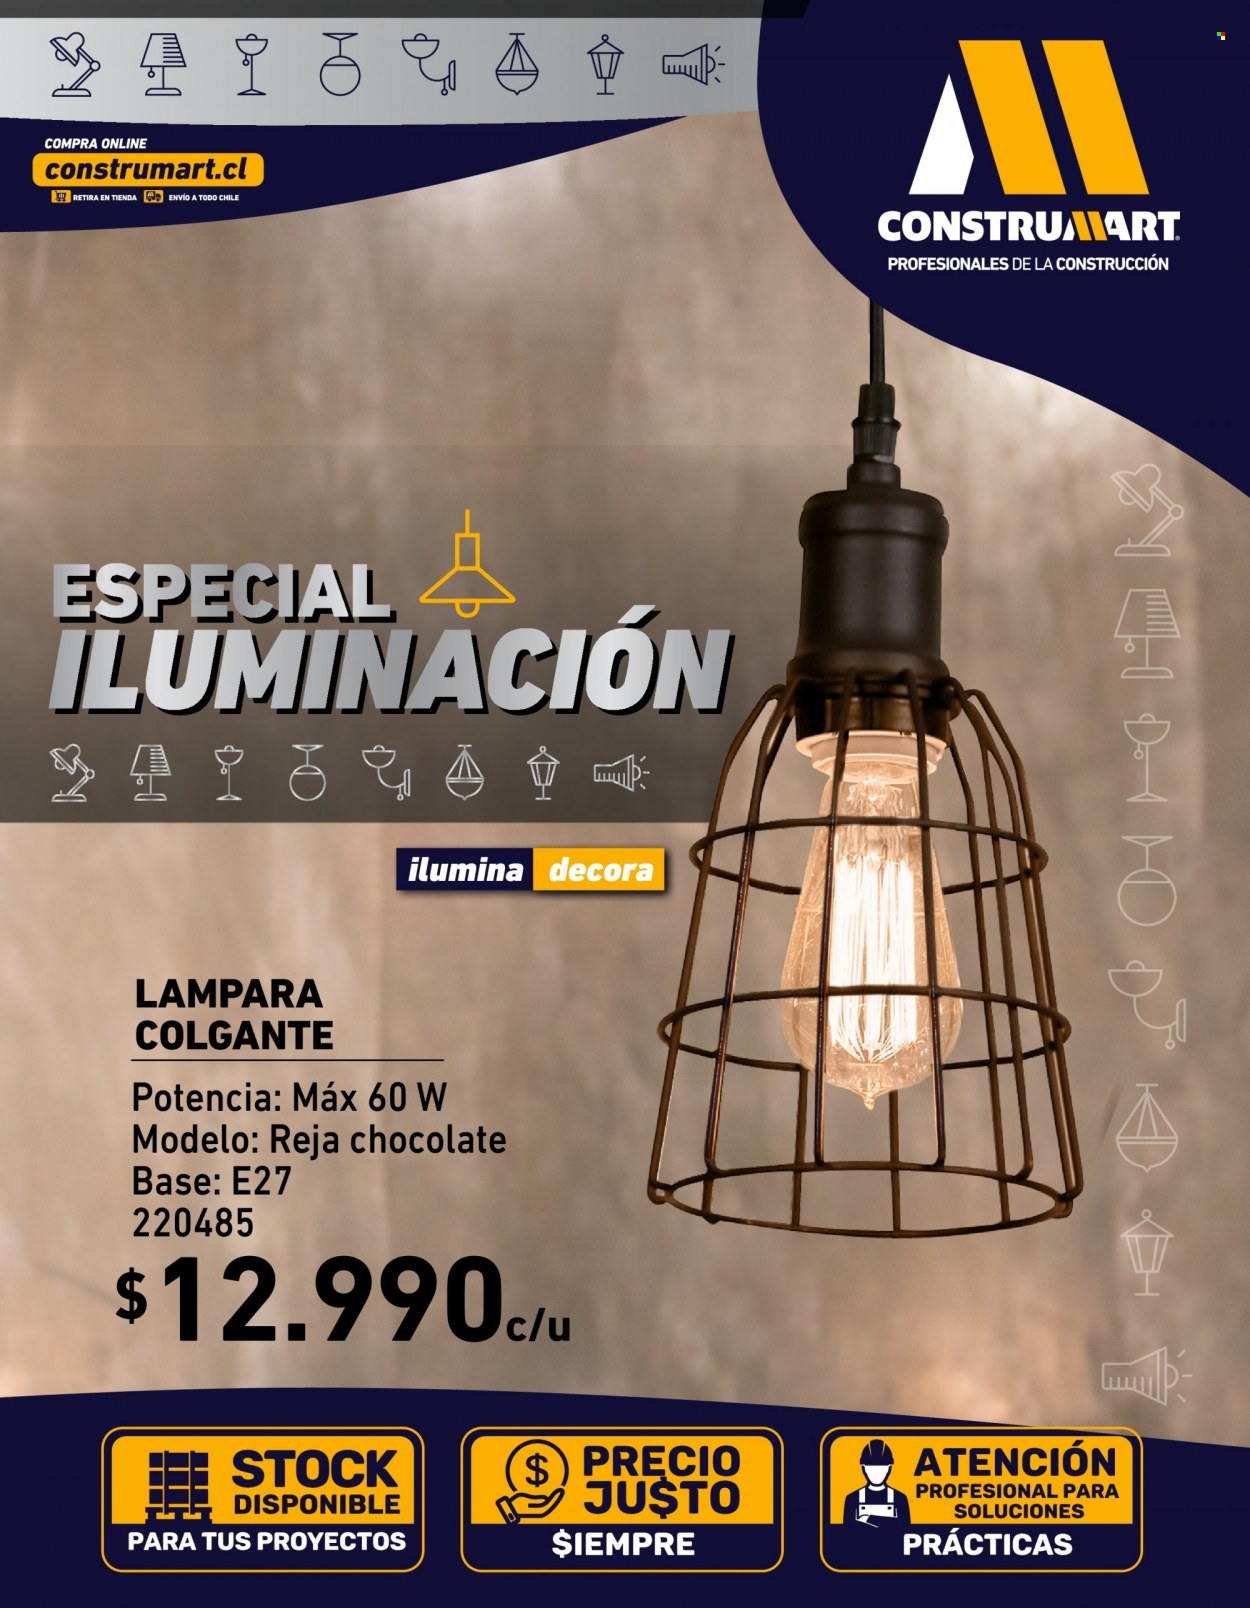 thumbnail - Catálogo Construmart - 16.05.2022 - 16.06.2022 - Ventas - lámpara, lámpara de colgar, iluminación. Página 1.